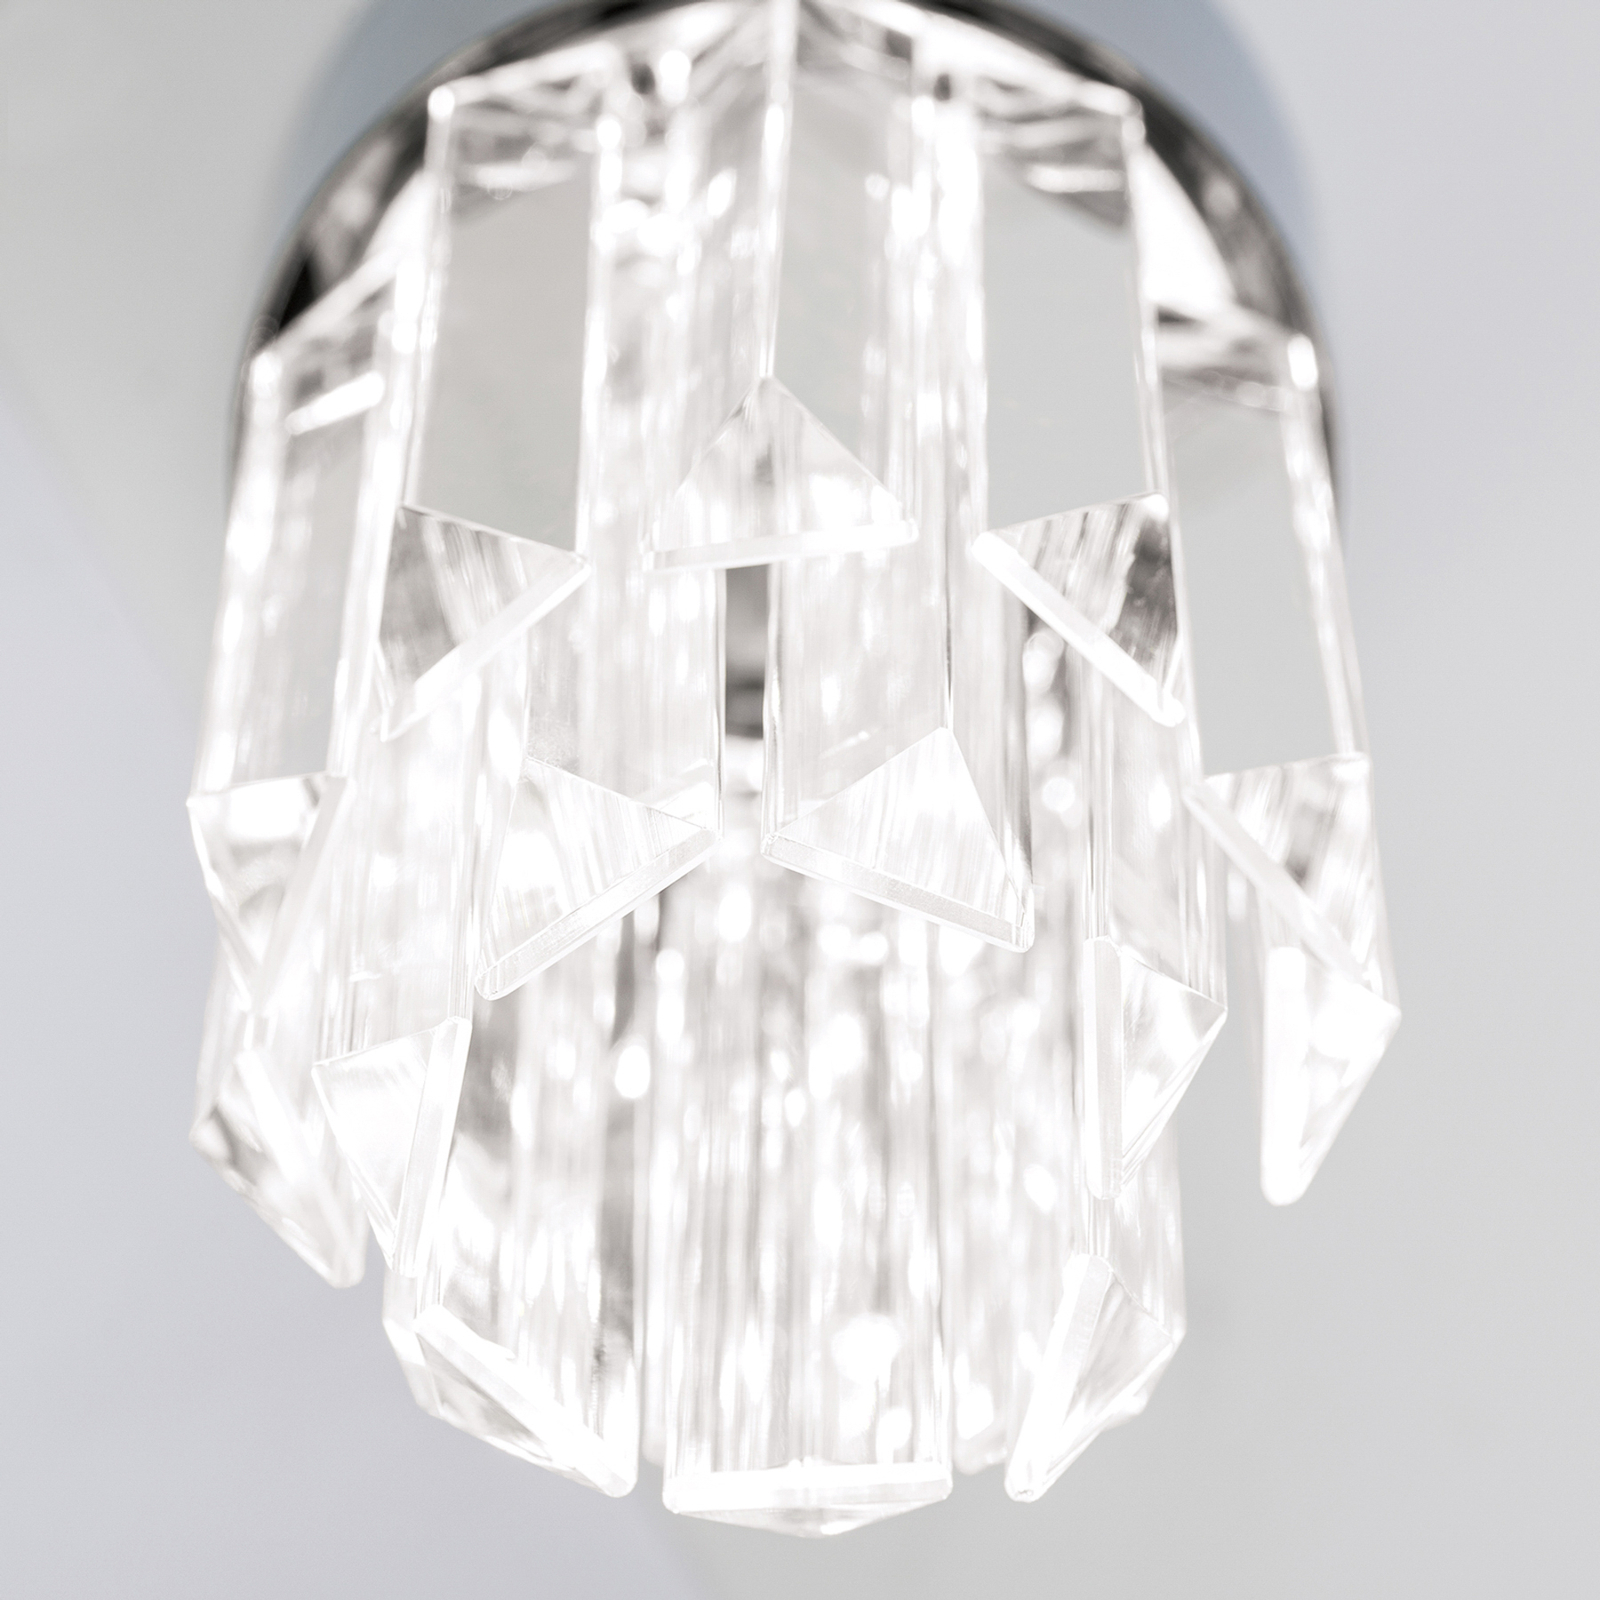 Prism LED ceiling light crystal glass Ø10cm chrome